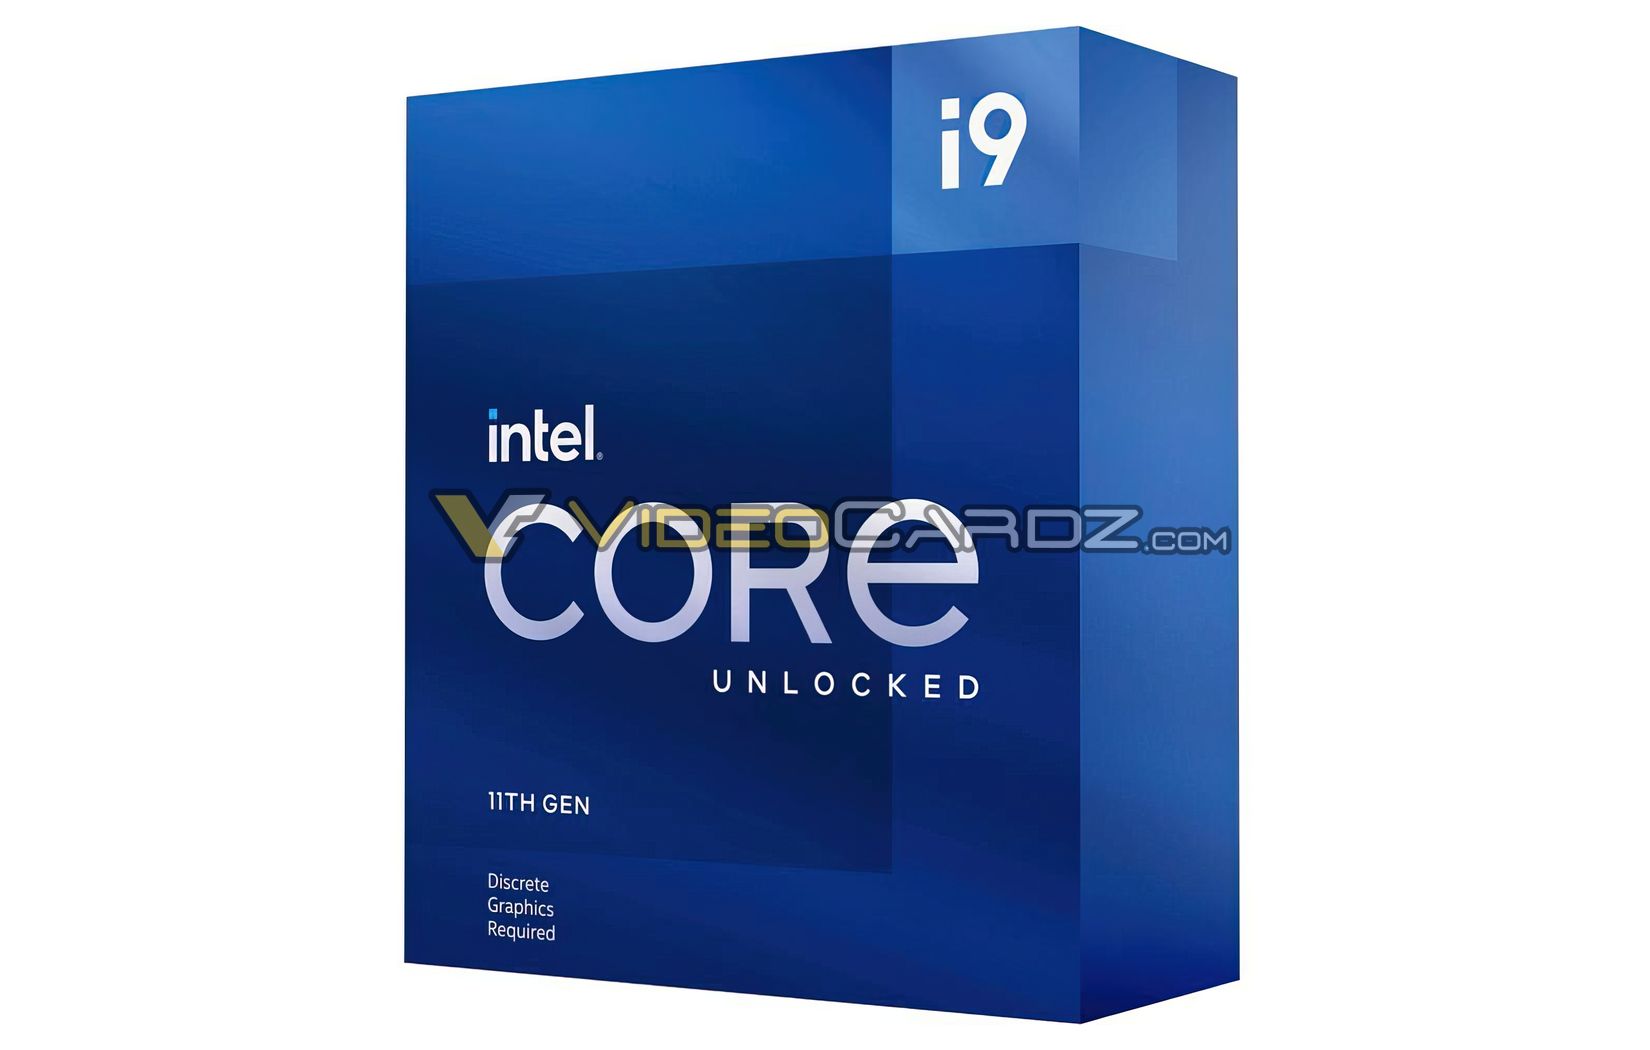 Intel-Core-i9-box_1.jpg